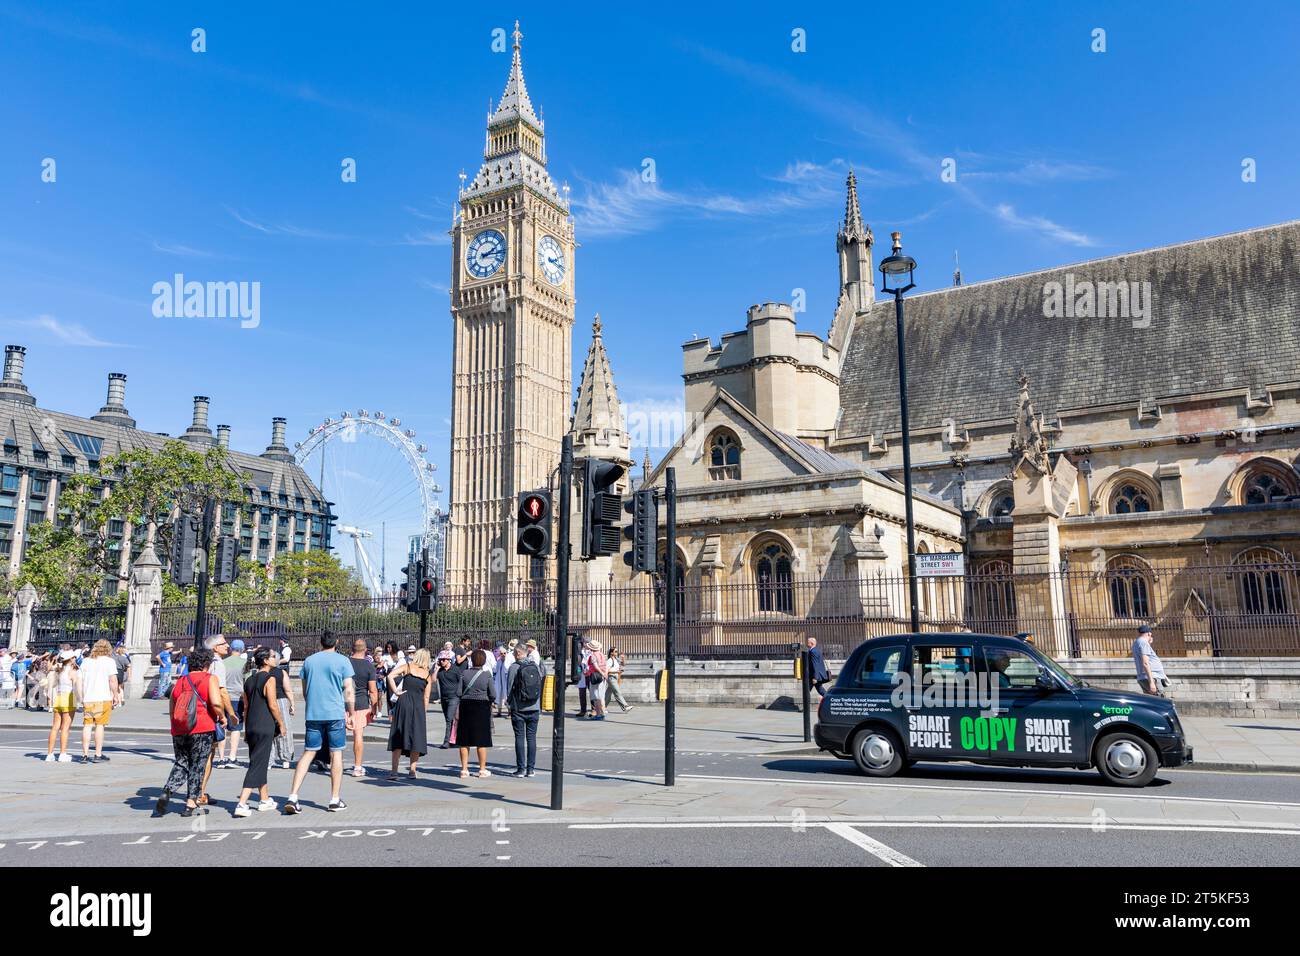 London Houses of Parliament, Big Ben, London eye and black taxi cab, September 2023 heatwave, Westminster,London,England,UK,2023 Stock Photo